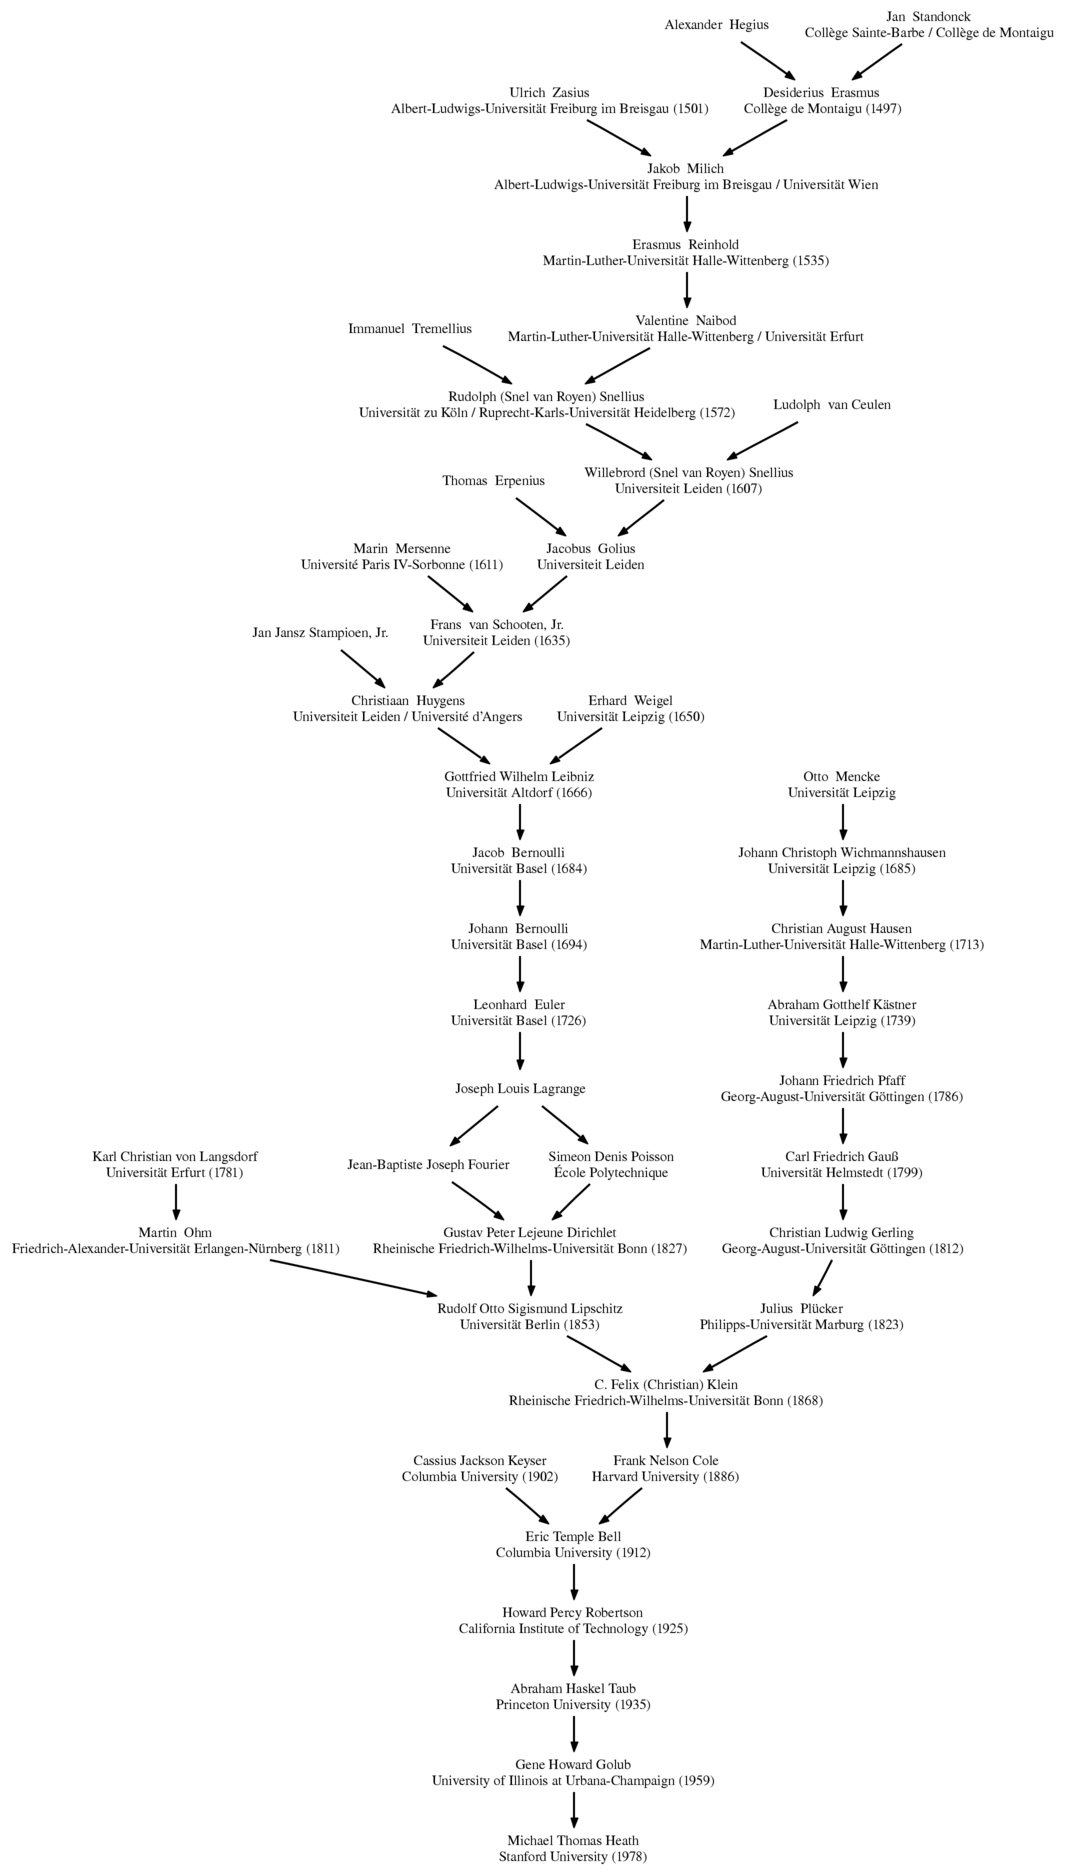 academic genealogical tree of Michael T. Heath